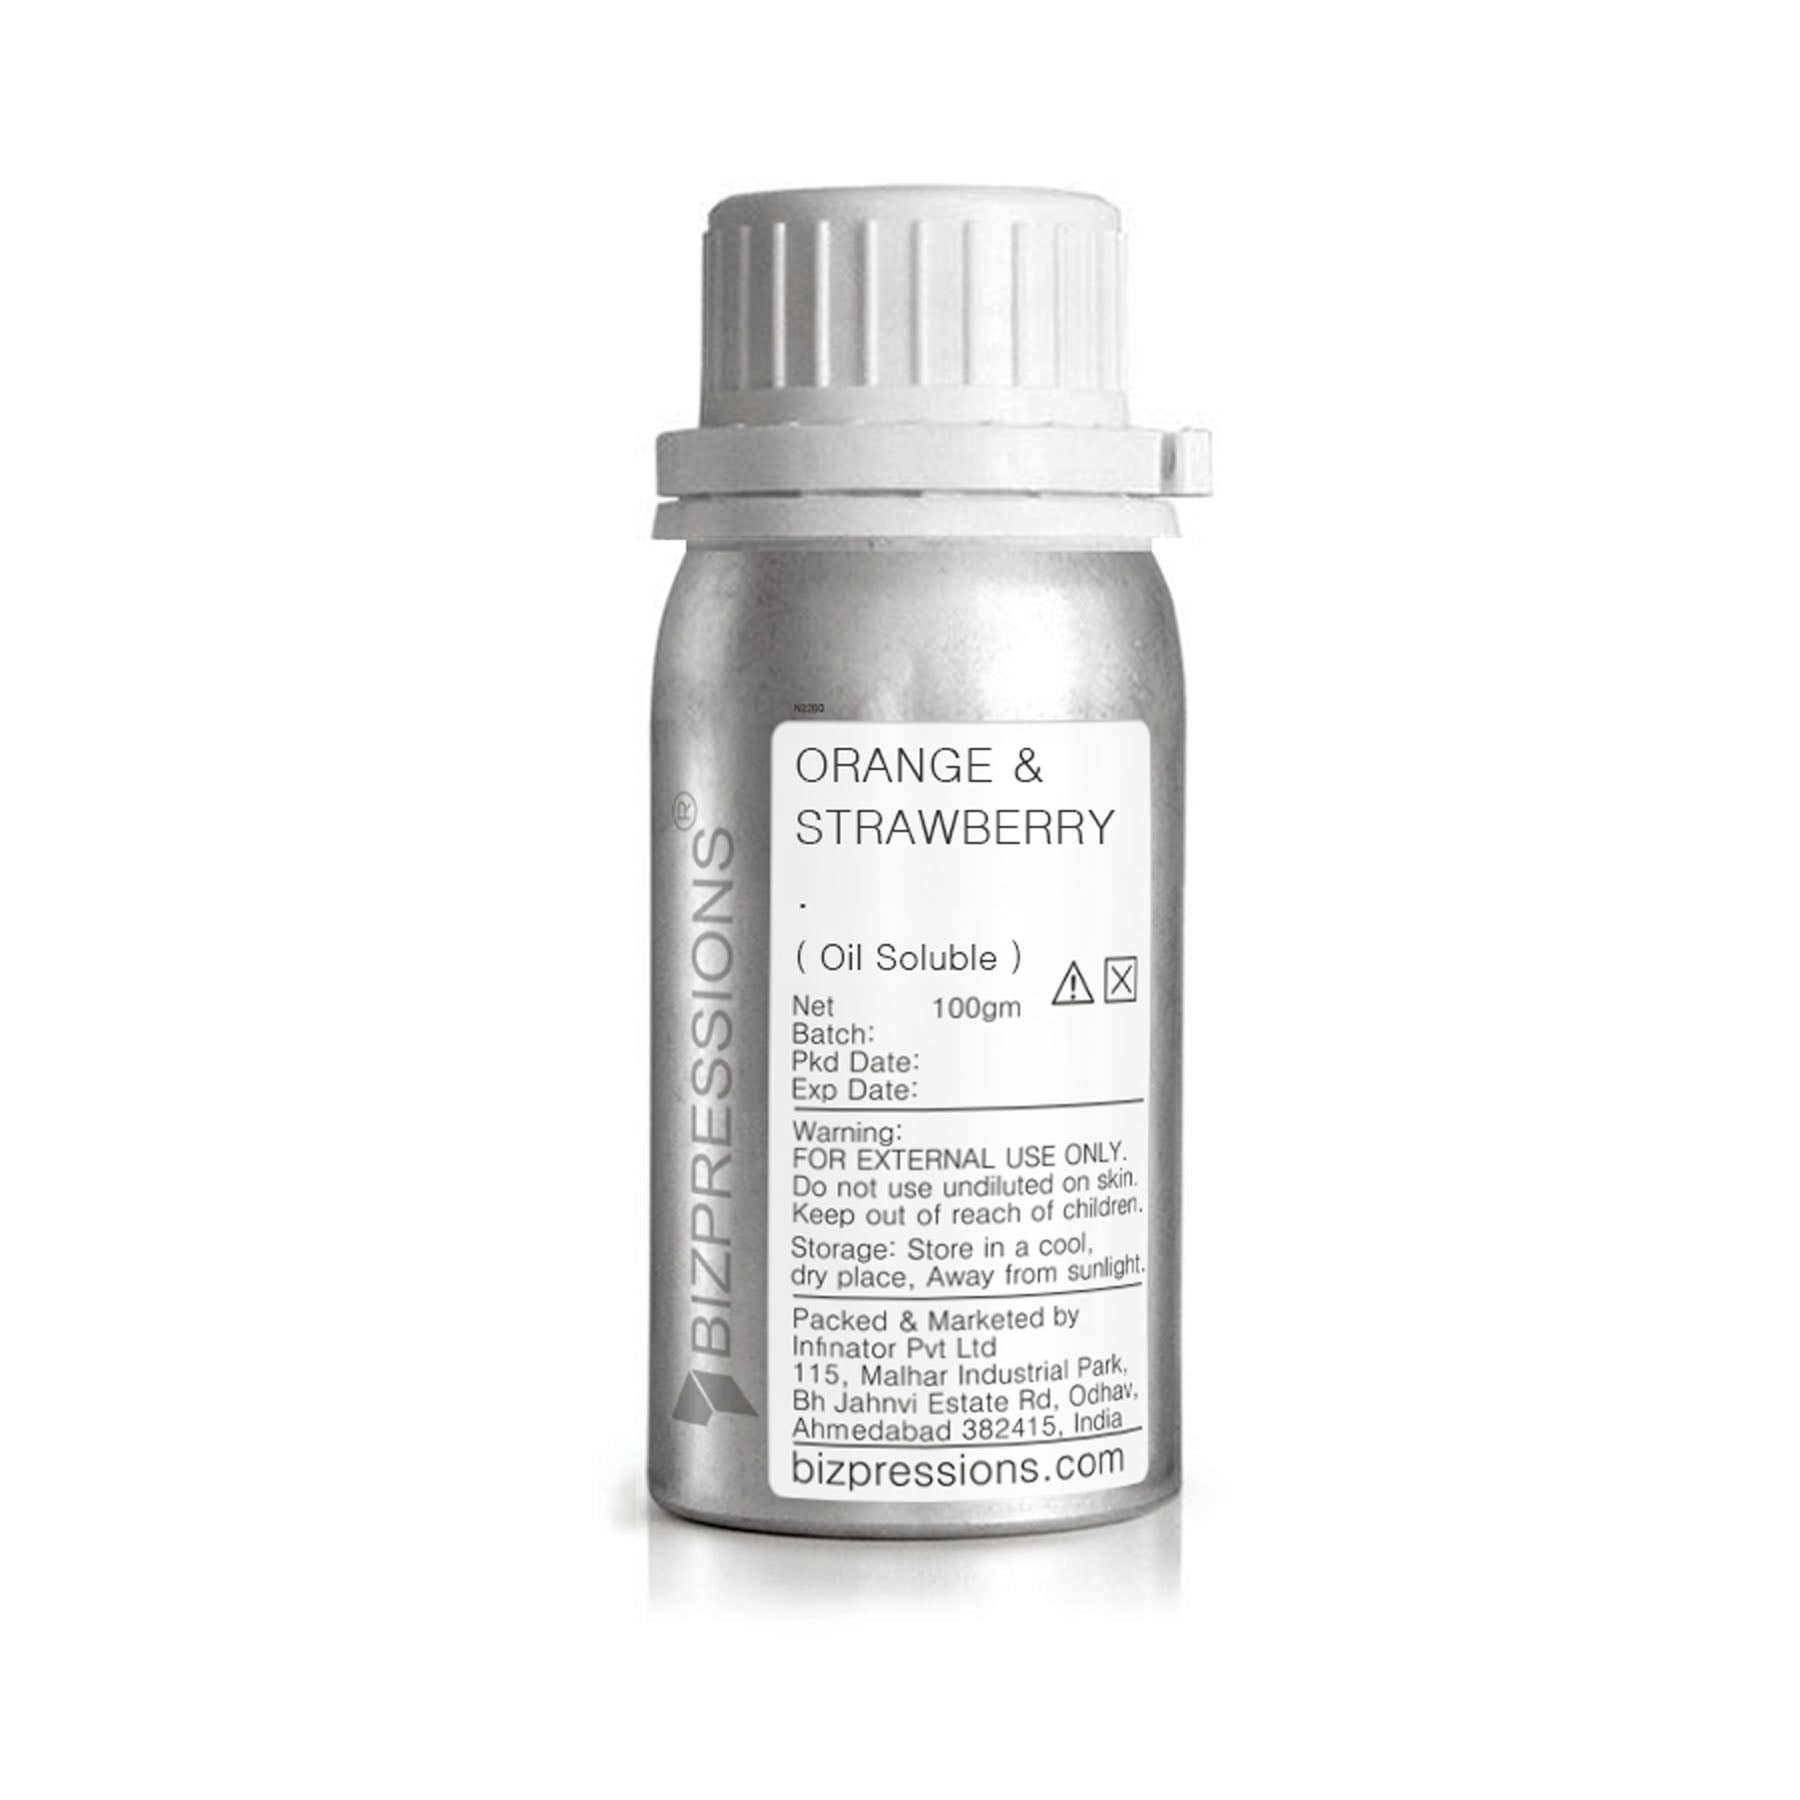 ORANGE & STRAWBERRY - Fragrance ( Oil Soluble ) - 100 gm